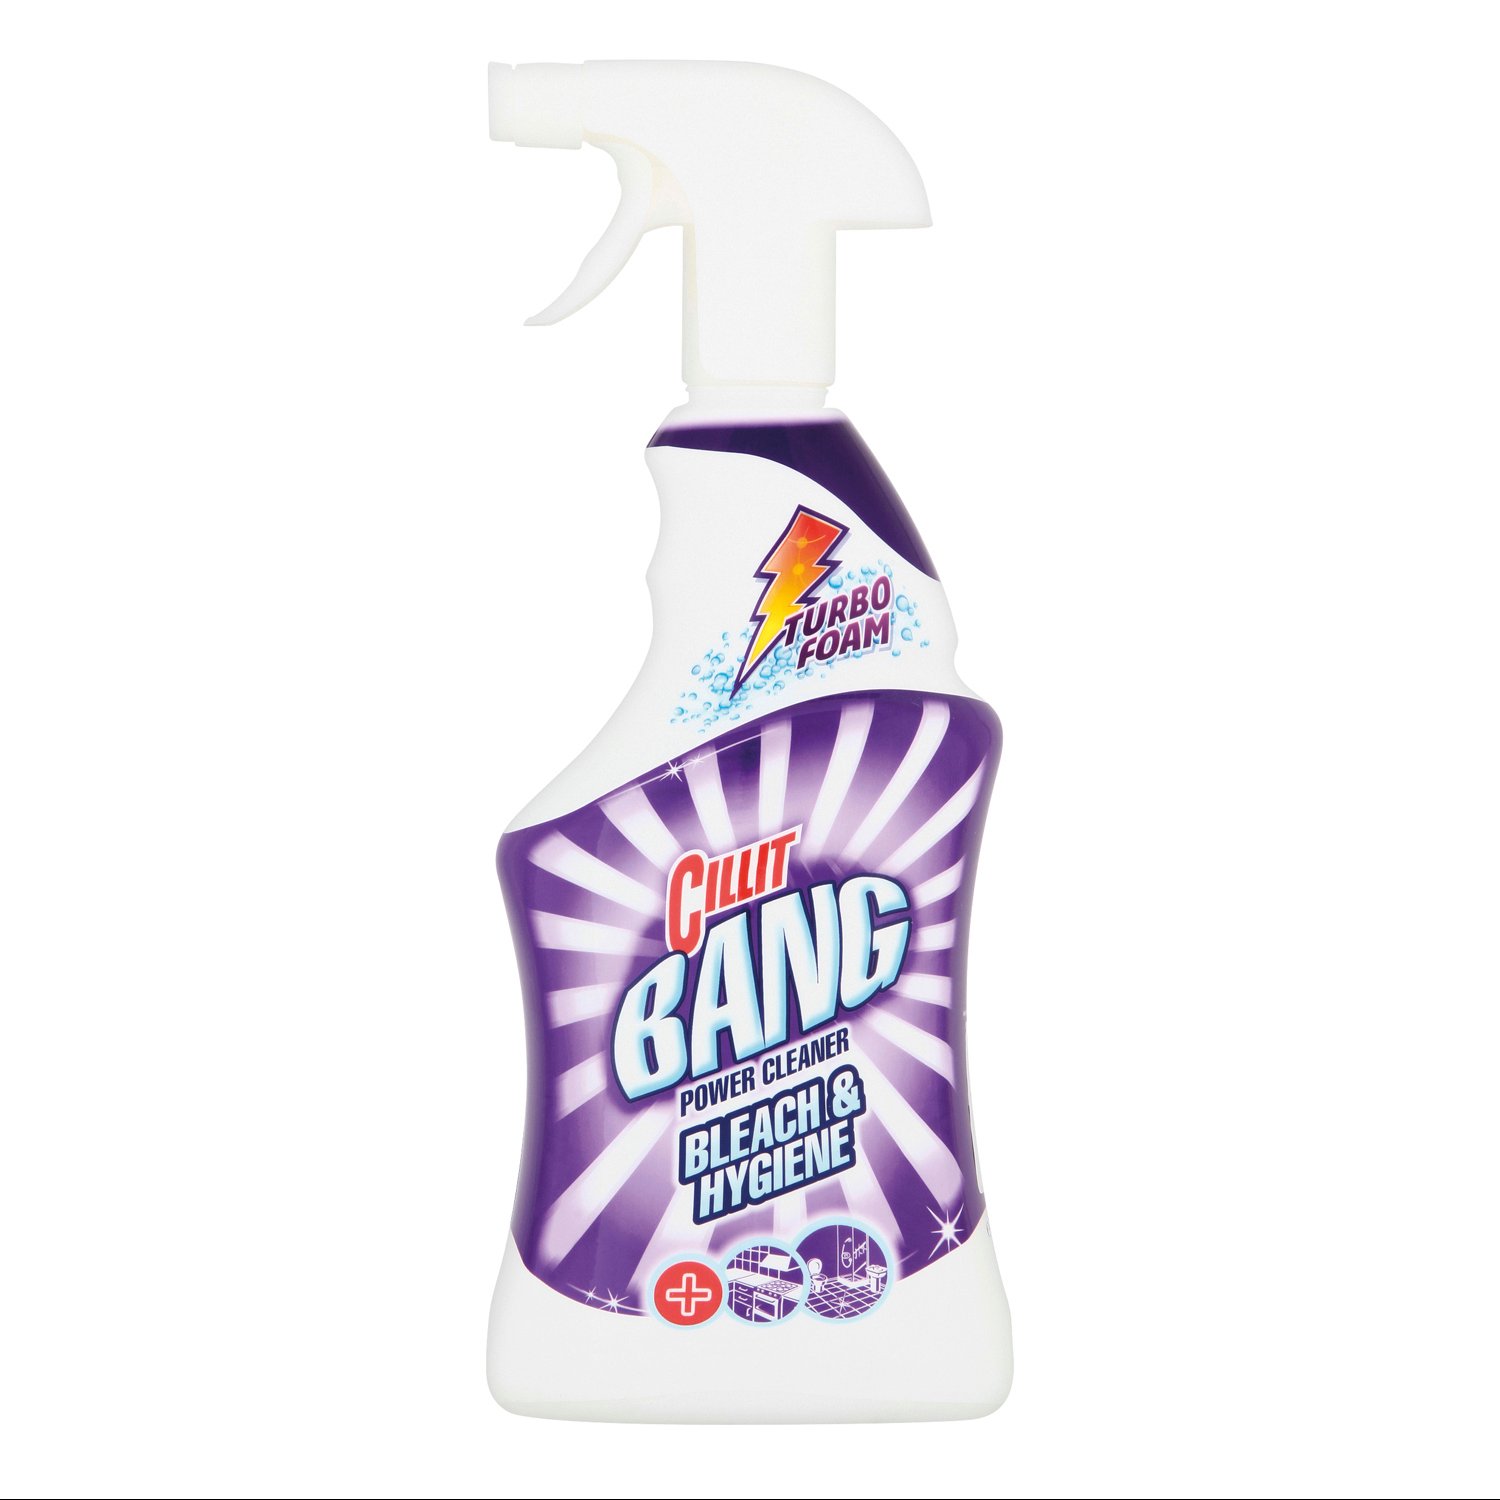 Cillit Bang Bleach And Hygiene Spray 750ml Image